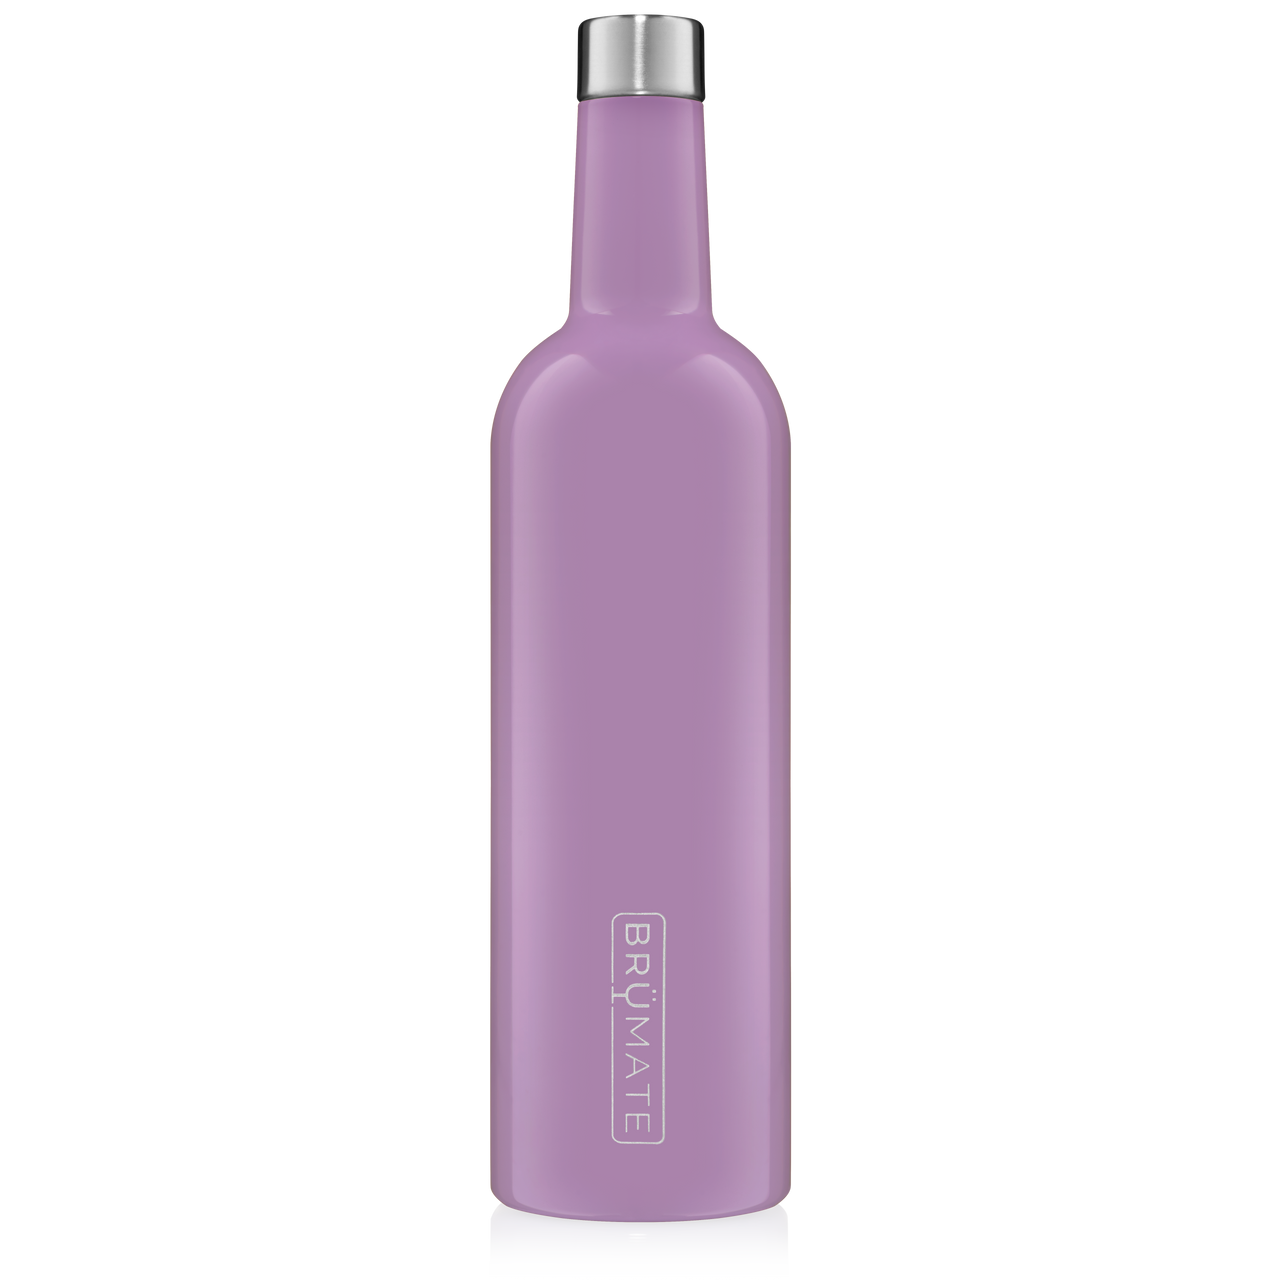 BruMate Violet Winesulator 25 oz Wine Canteen